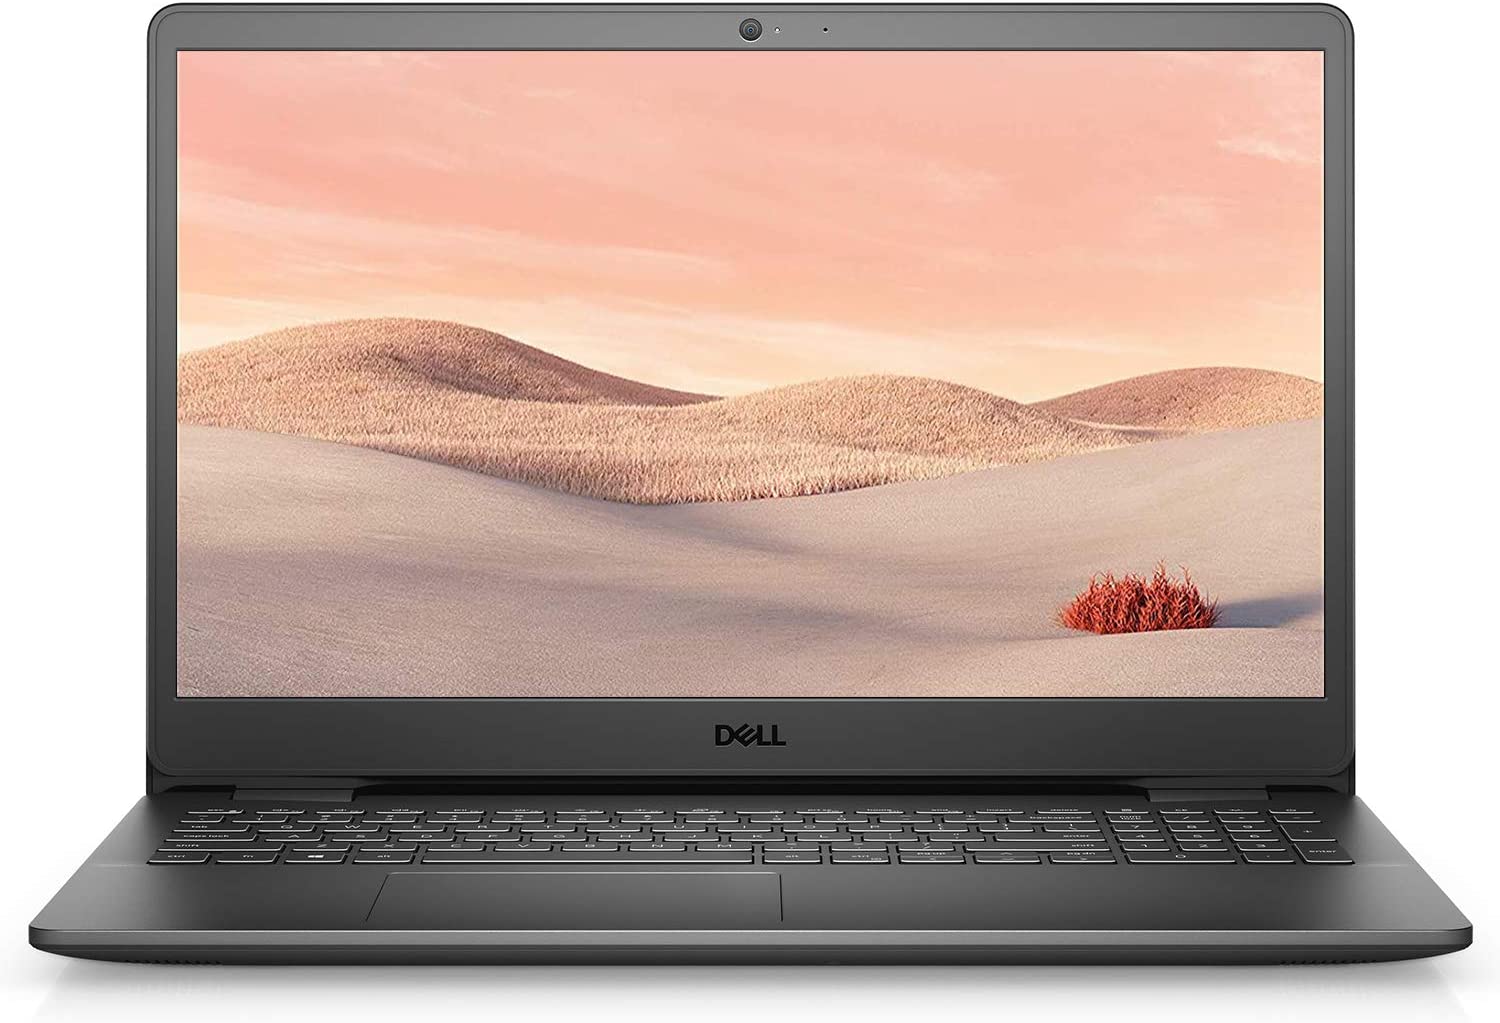 Dell Inspiron 15 3000 Laptop (2021 Latest Model), 15.6 HD Display, Intel N4020 Dual-Core Processor